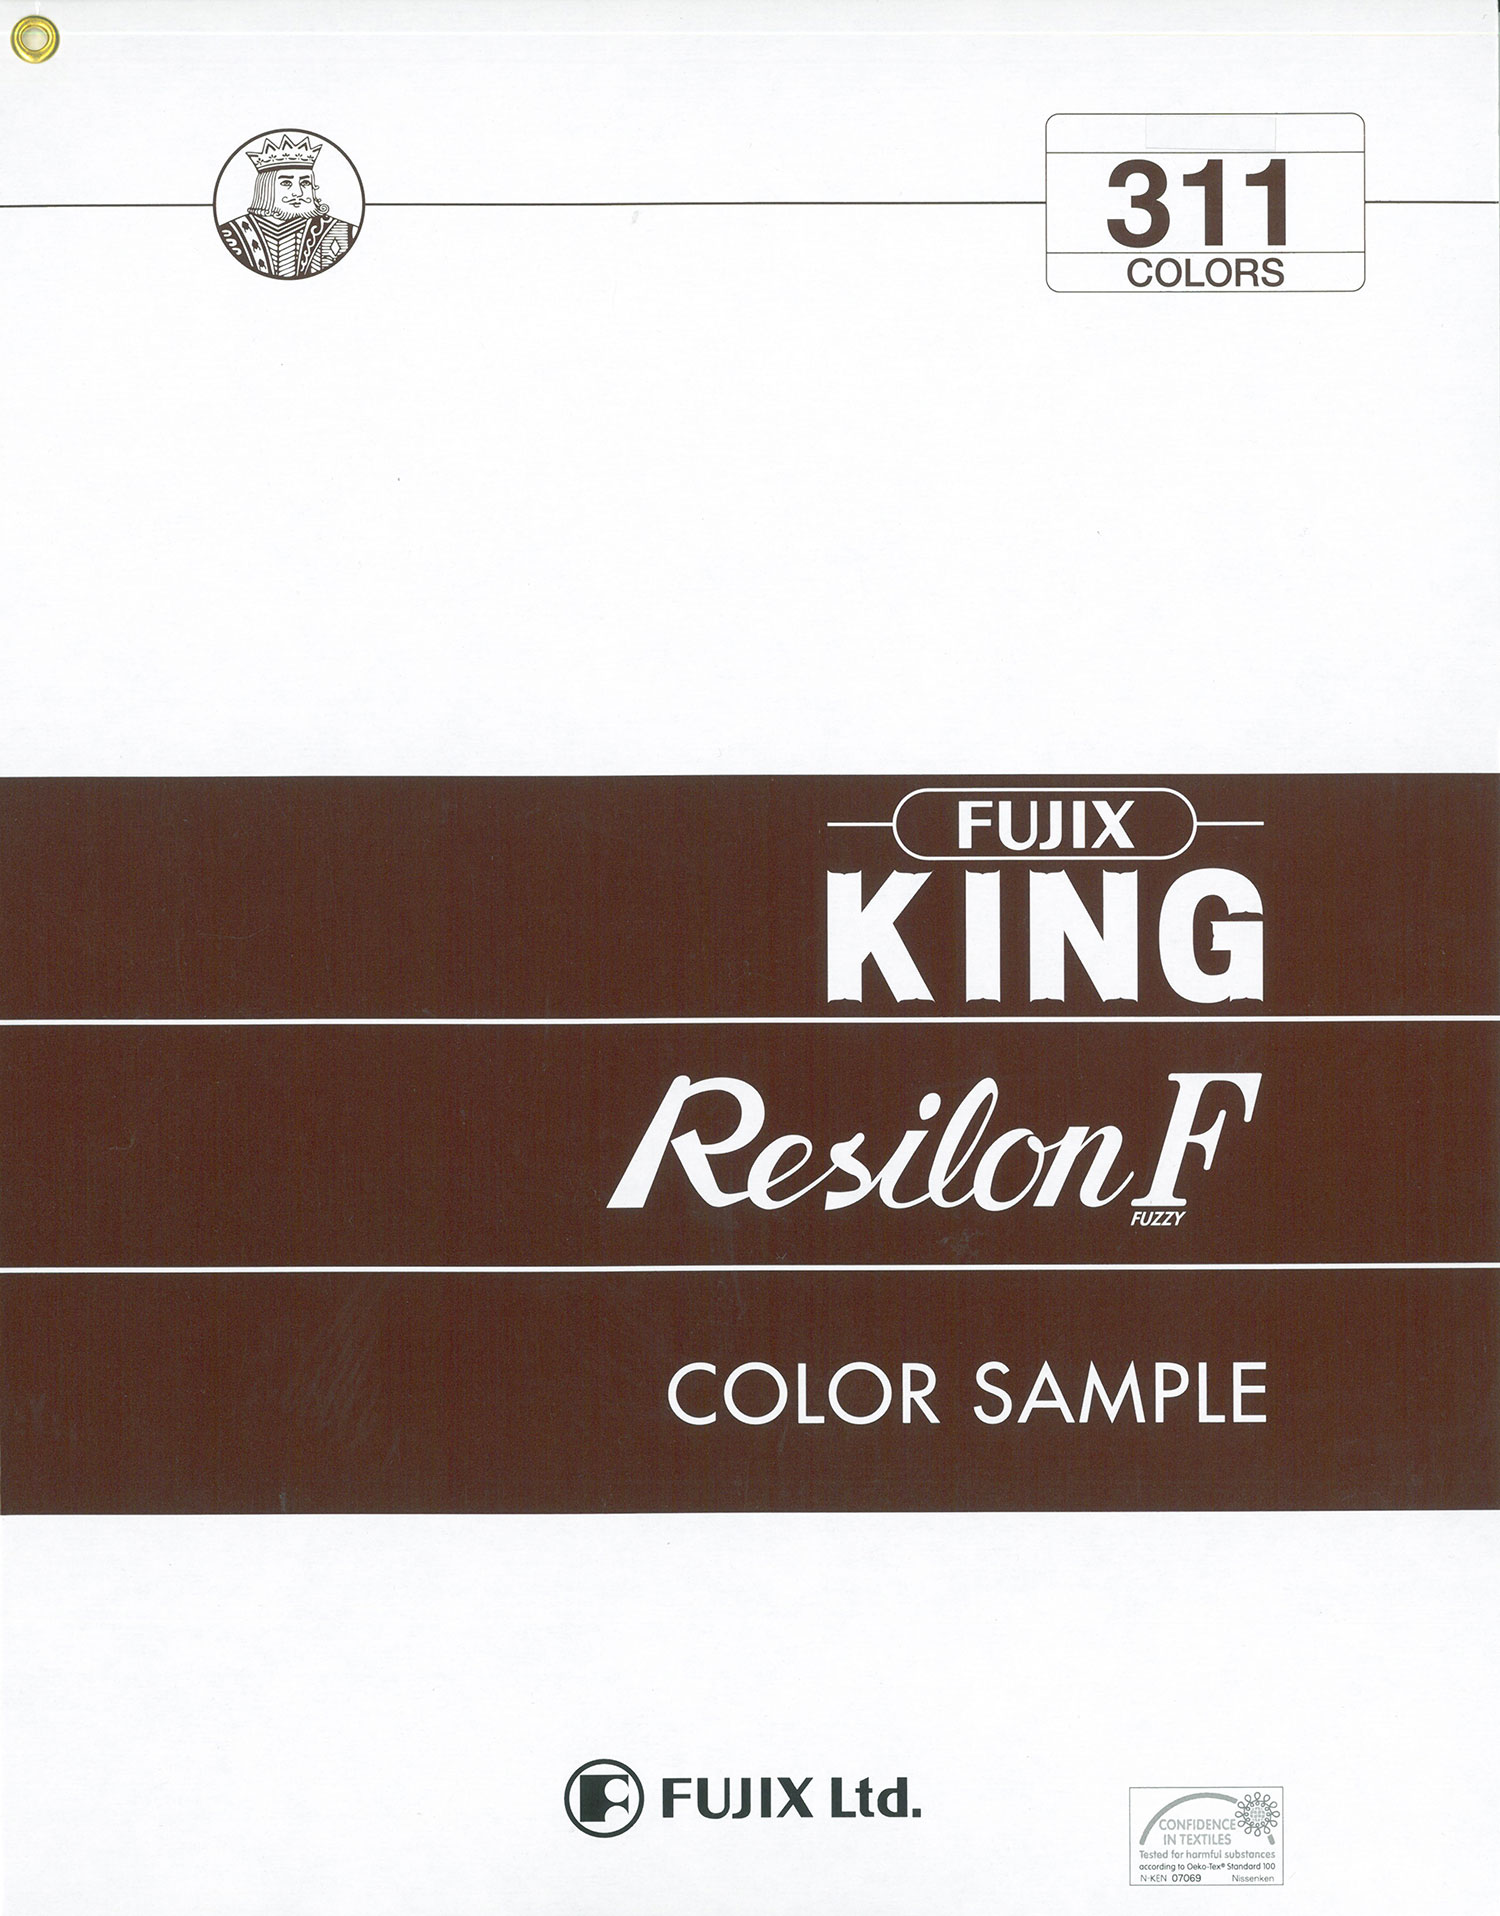 FUJIX-SAMPLE-7 KING RESILON FUZZY[Scheda Campione] FUJIX